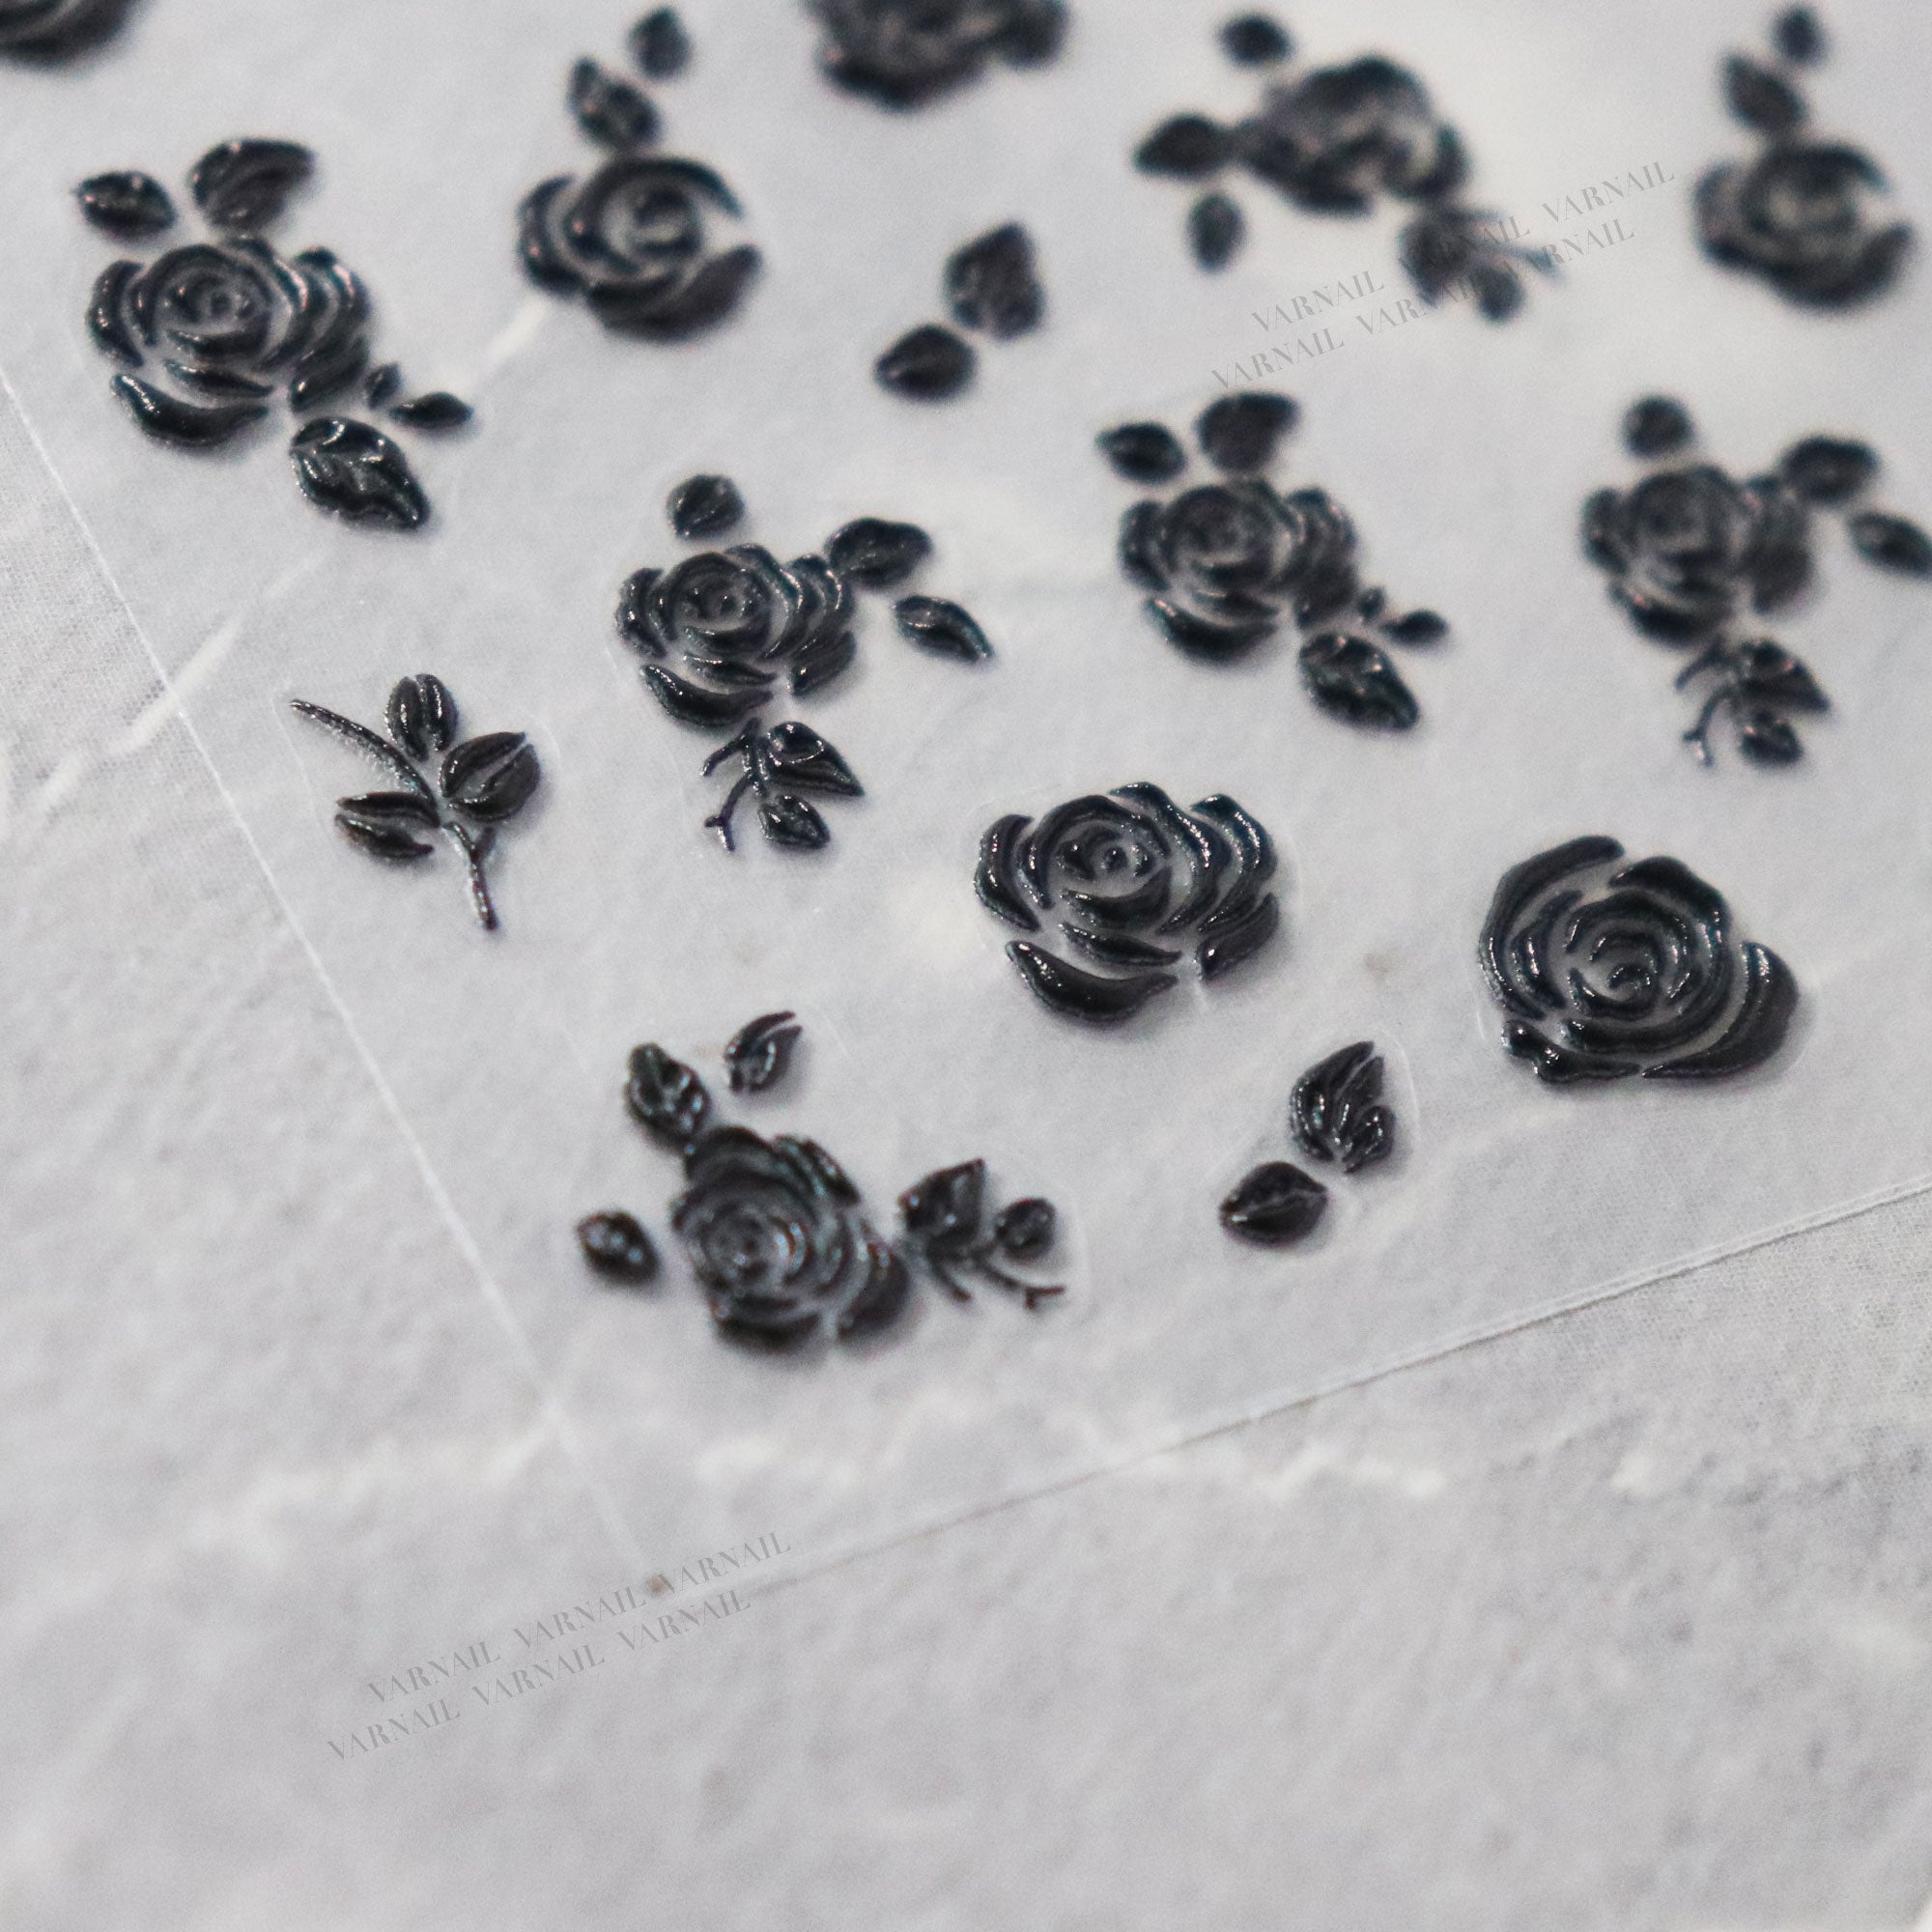 5D Nail Sticker - Black Rose